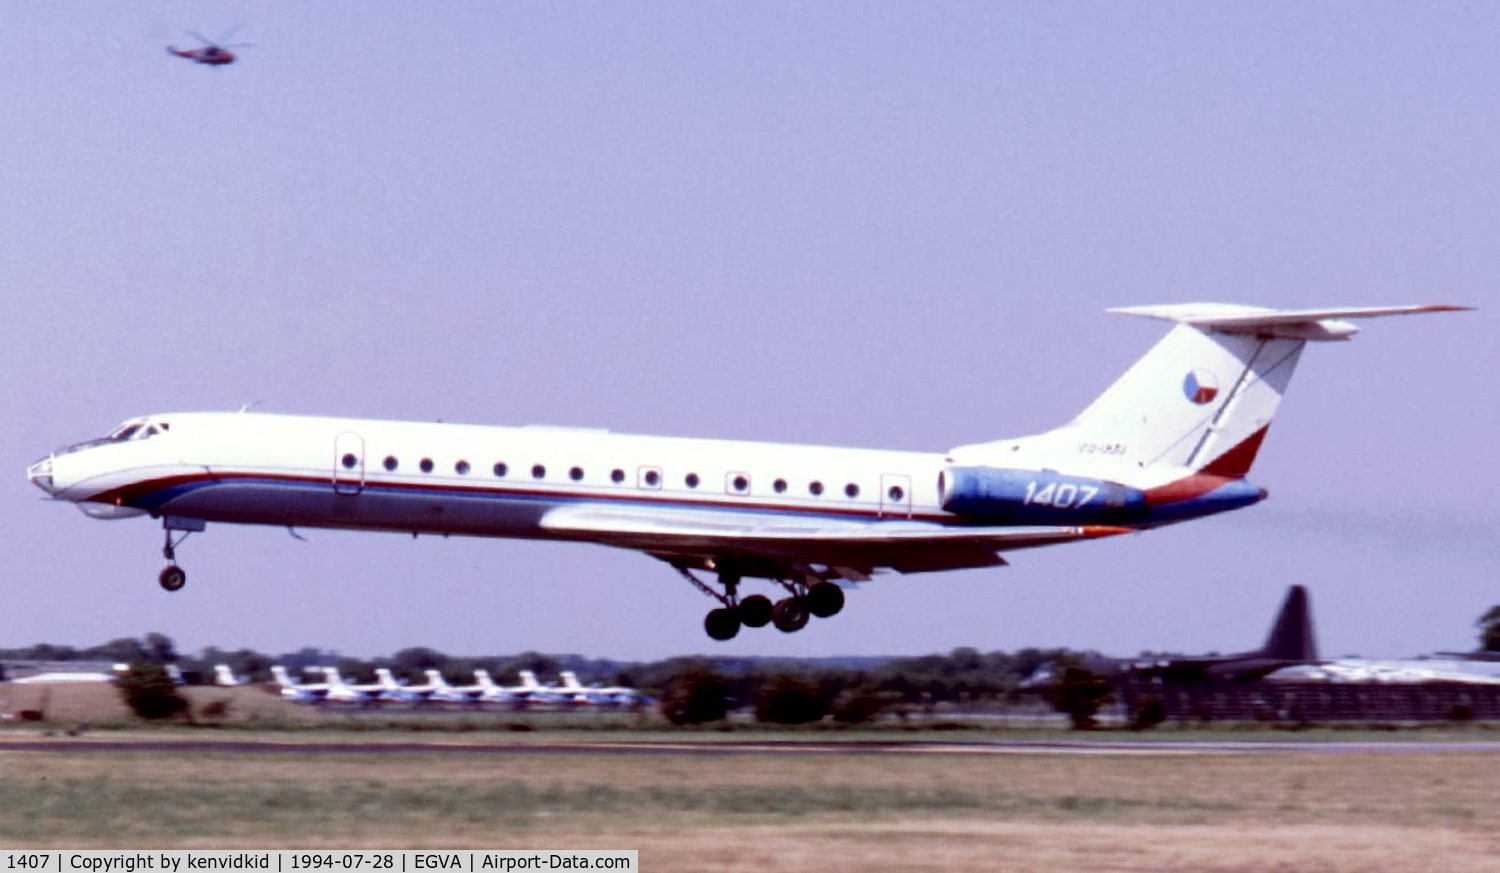 1407, 1971 Tupolev Tu-134 C/N 1351407, Czech Republic Air Force arriving at RIAT.